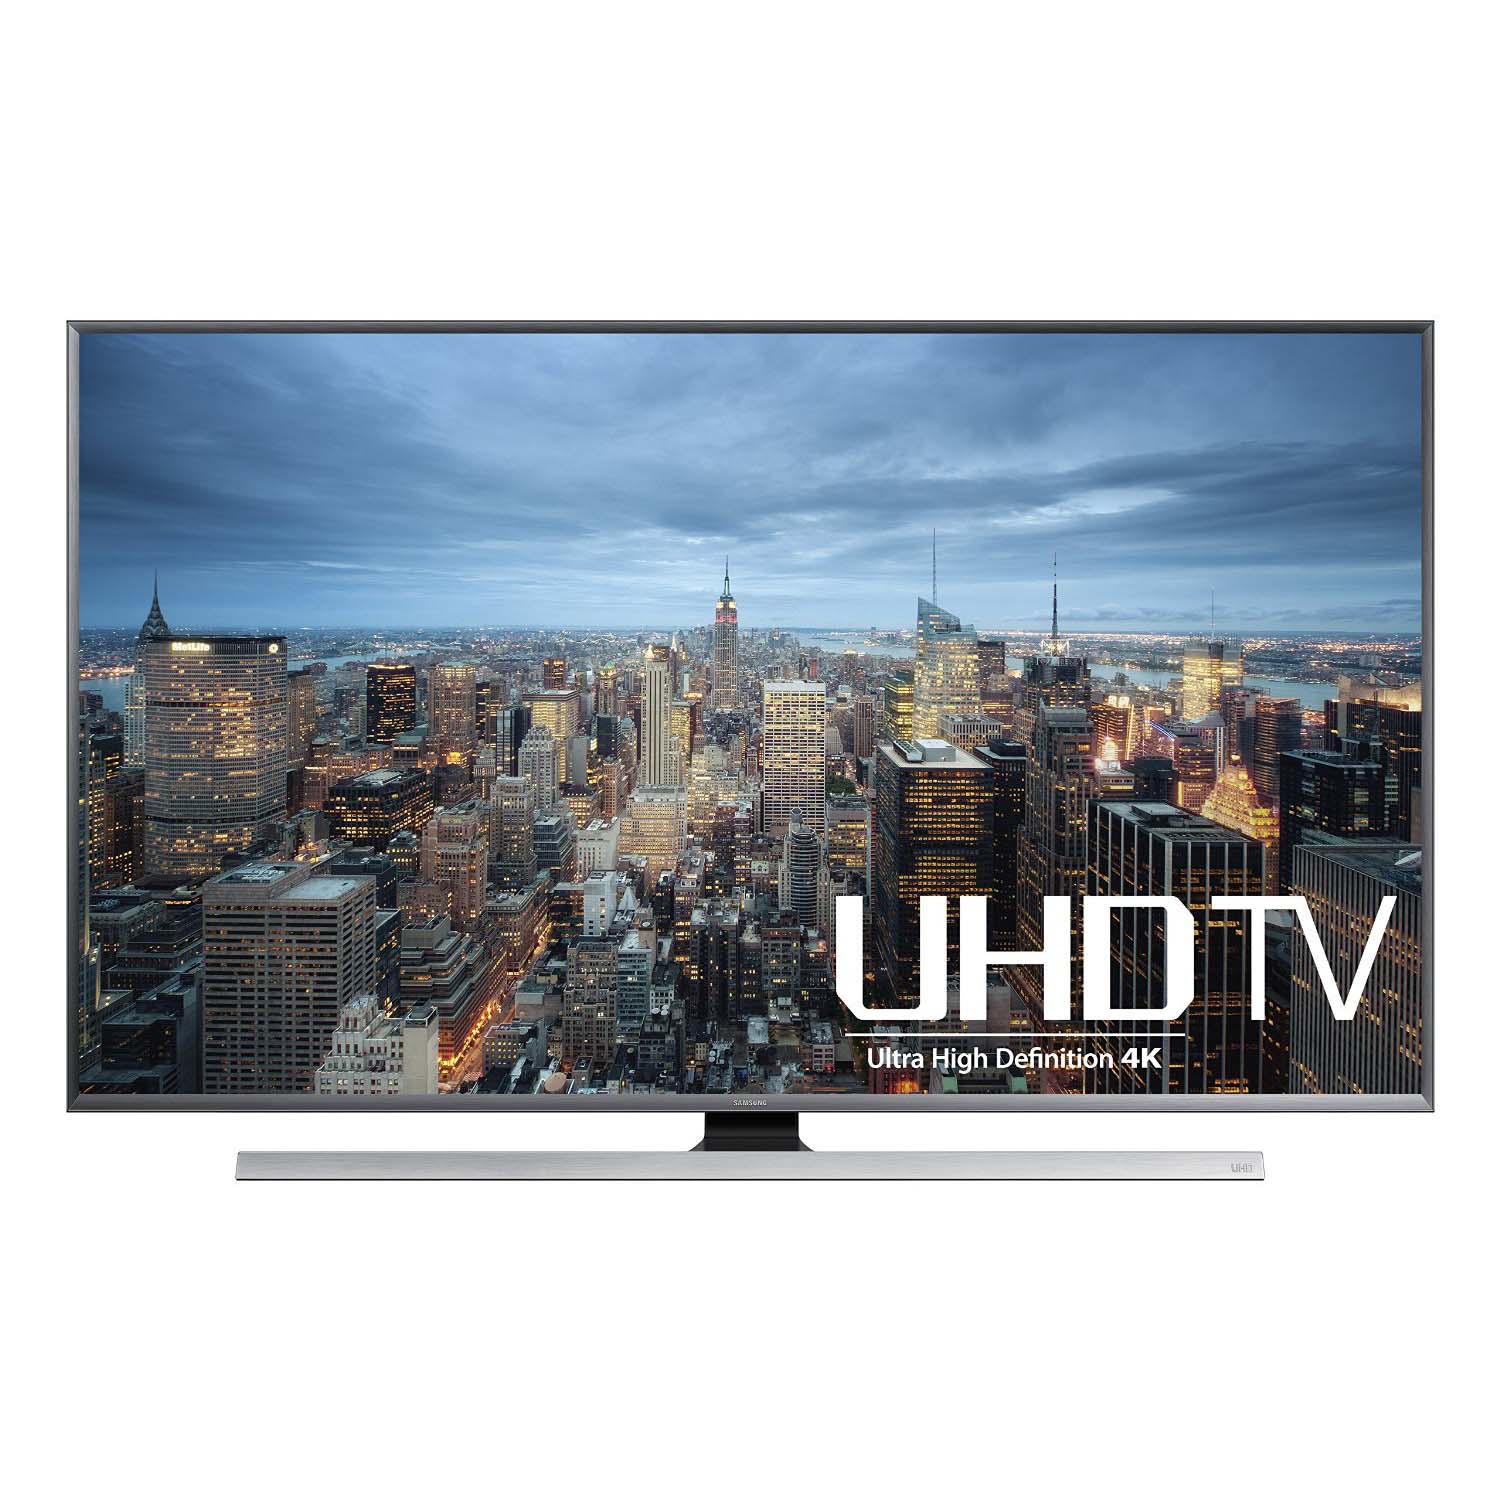 Samsung UN75JU7100 75-Inch 4K Ultra HD 3D Smart LED TV (2015 Model) *관부가세 별도*